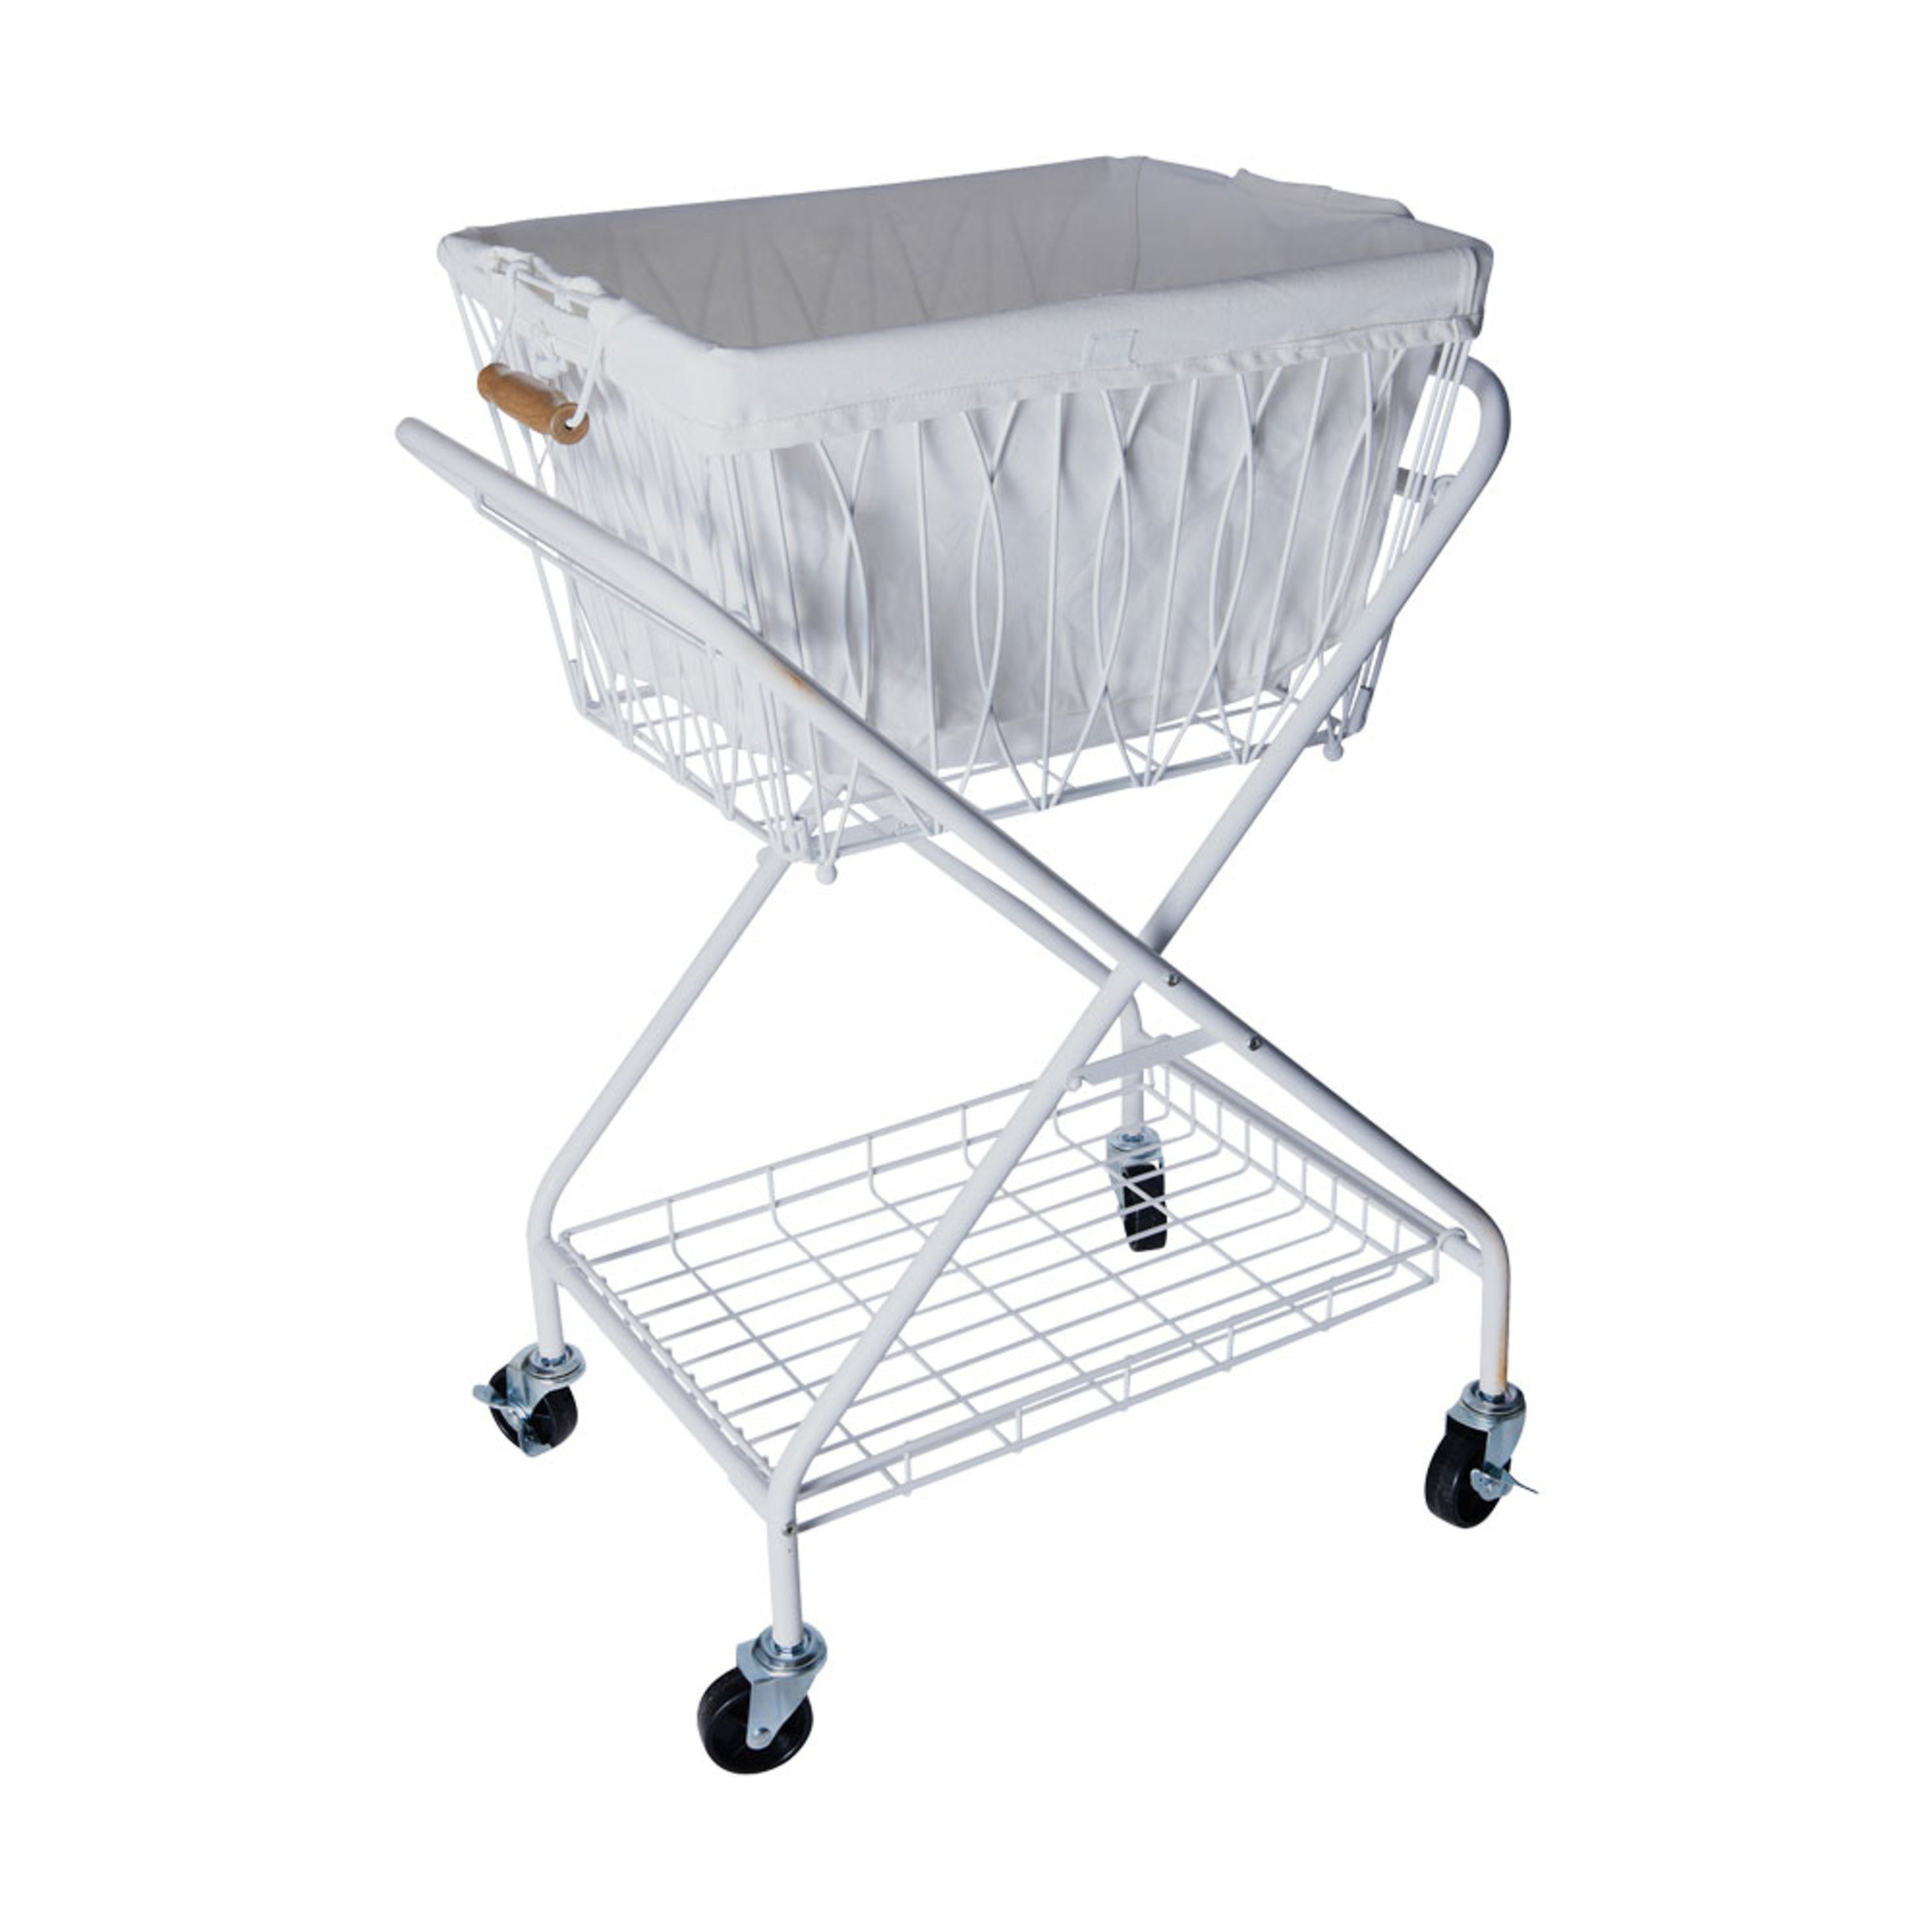 Artesa Verona Collapsible Metal Laundry Cart with Removable Basket & Canvas Bag